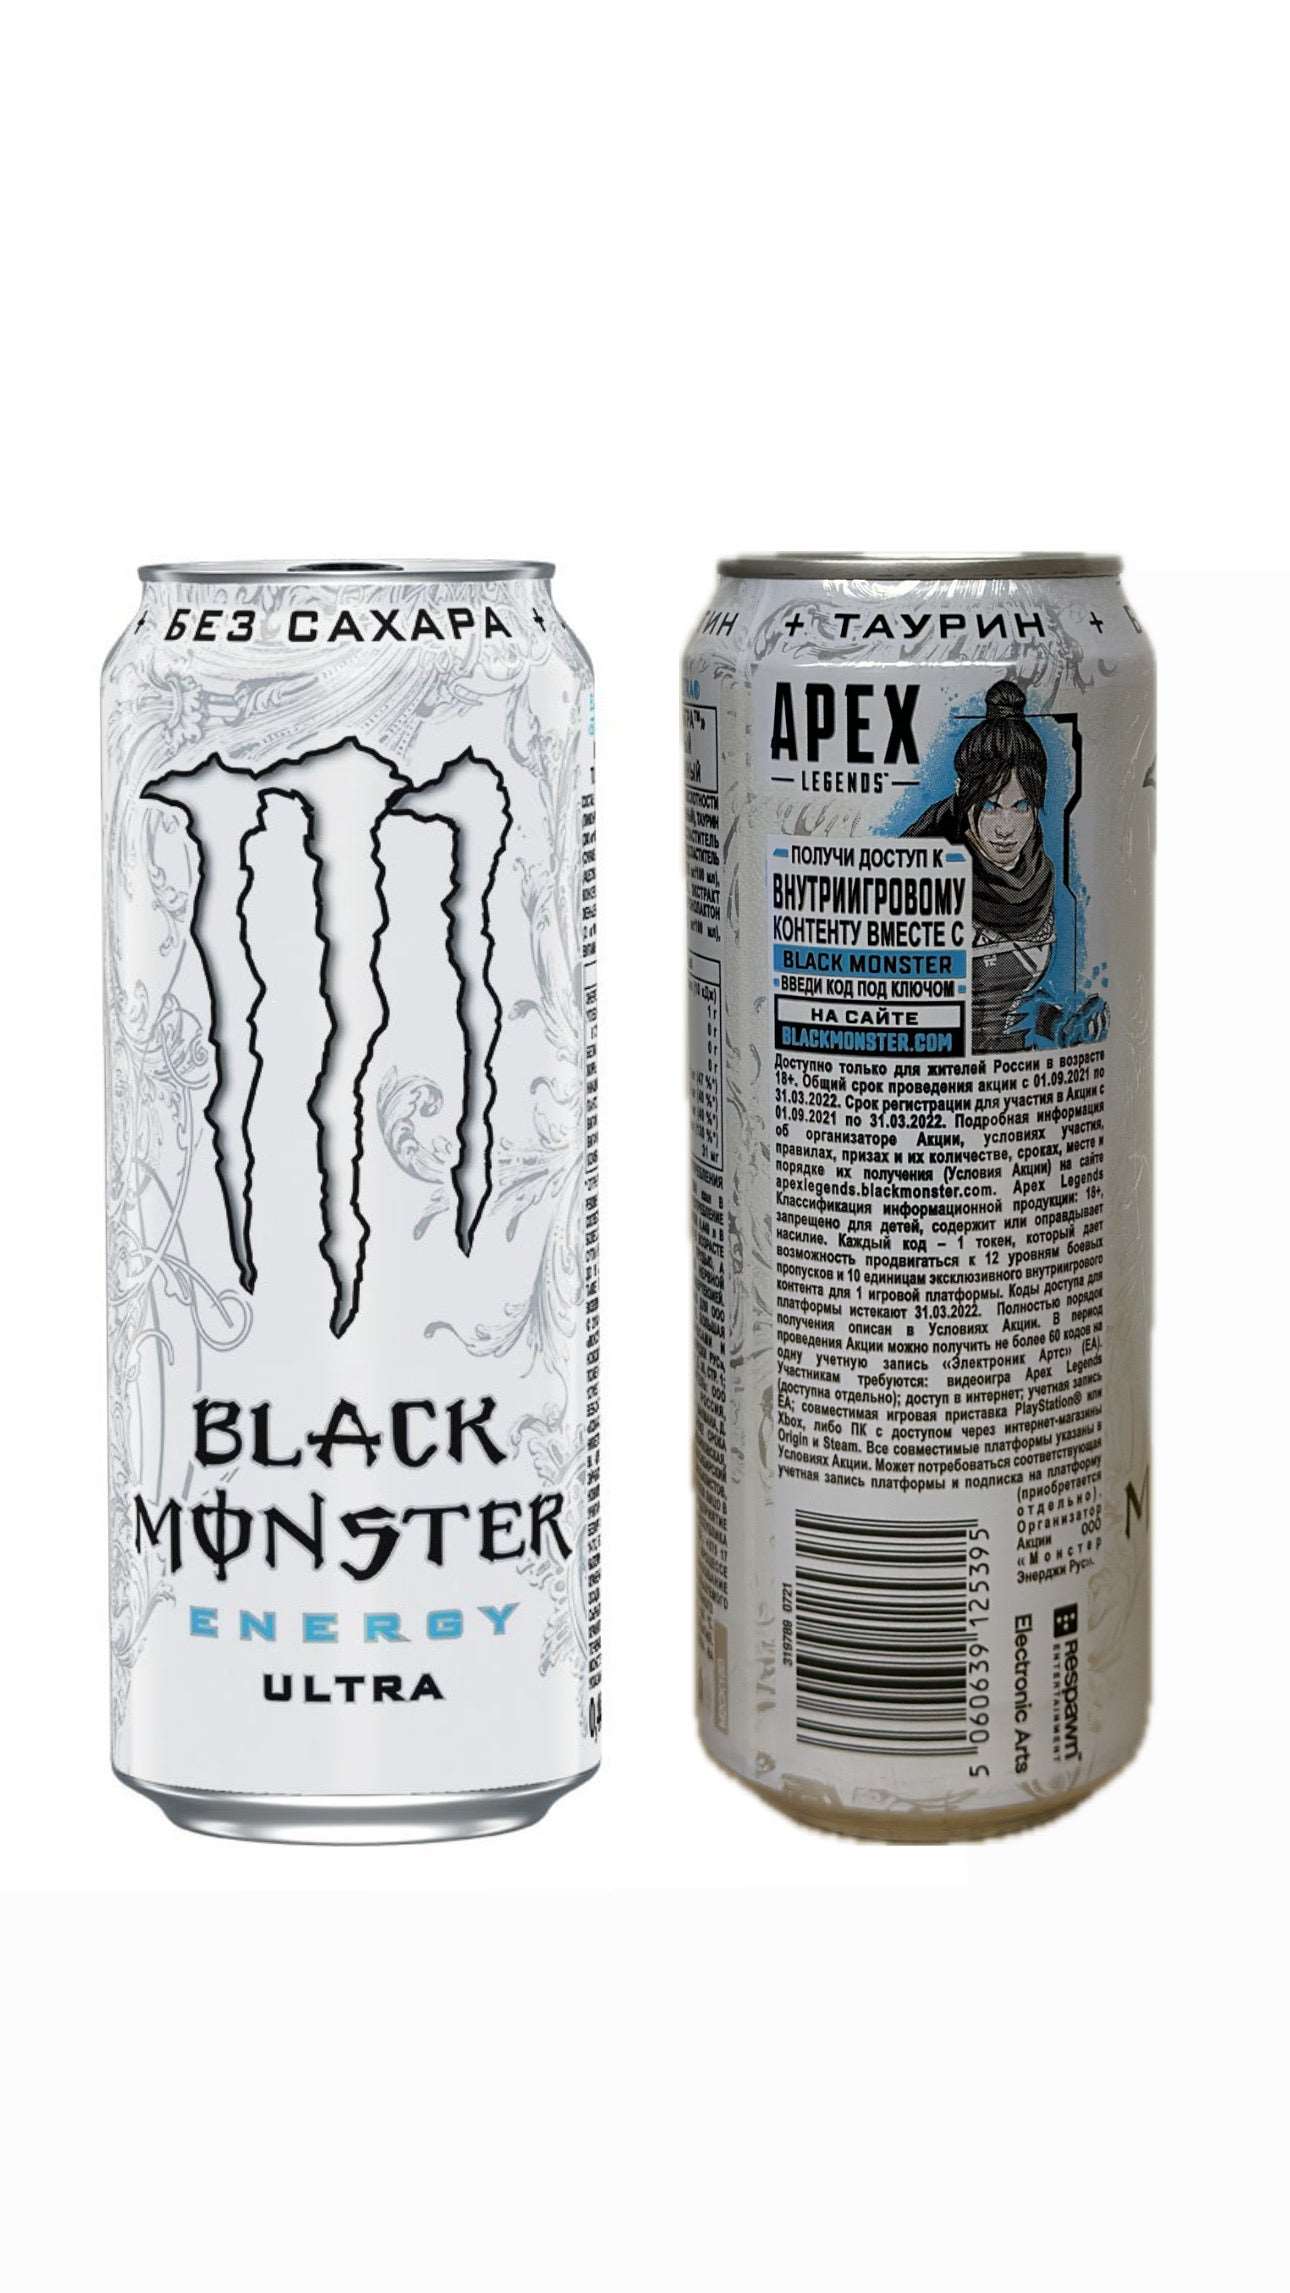 Black Monster Energy Ultra Apex Design (Russia)